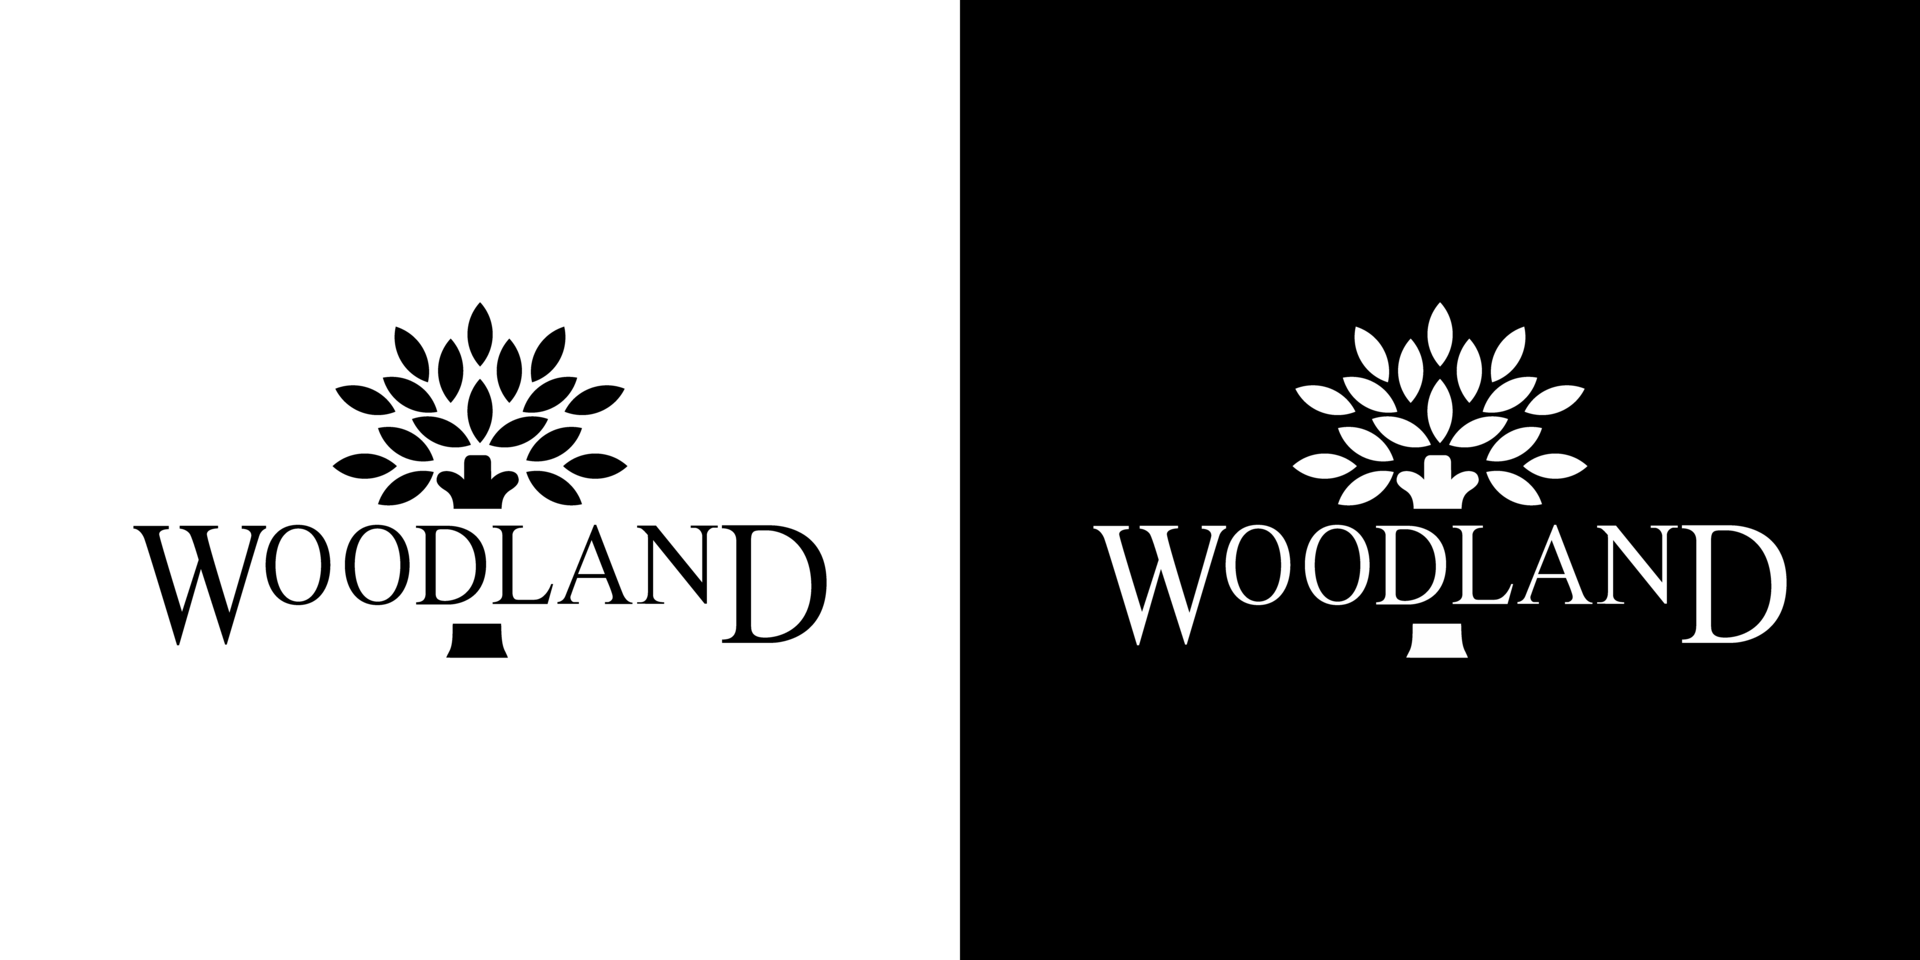 Woodland logo png, Woodland icon transparent png